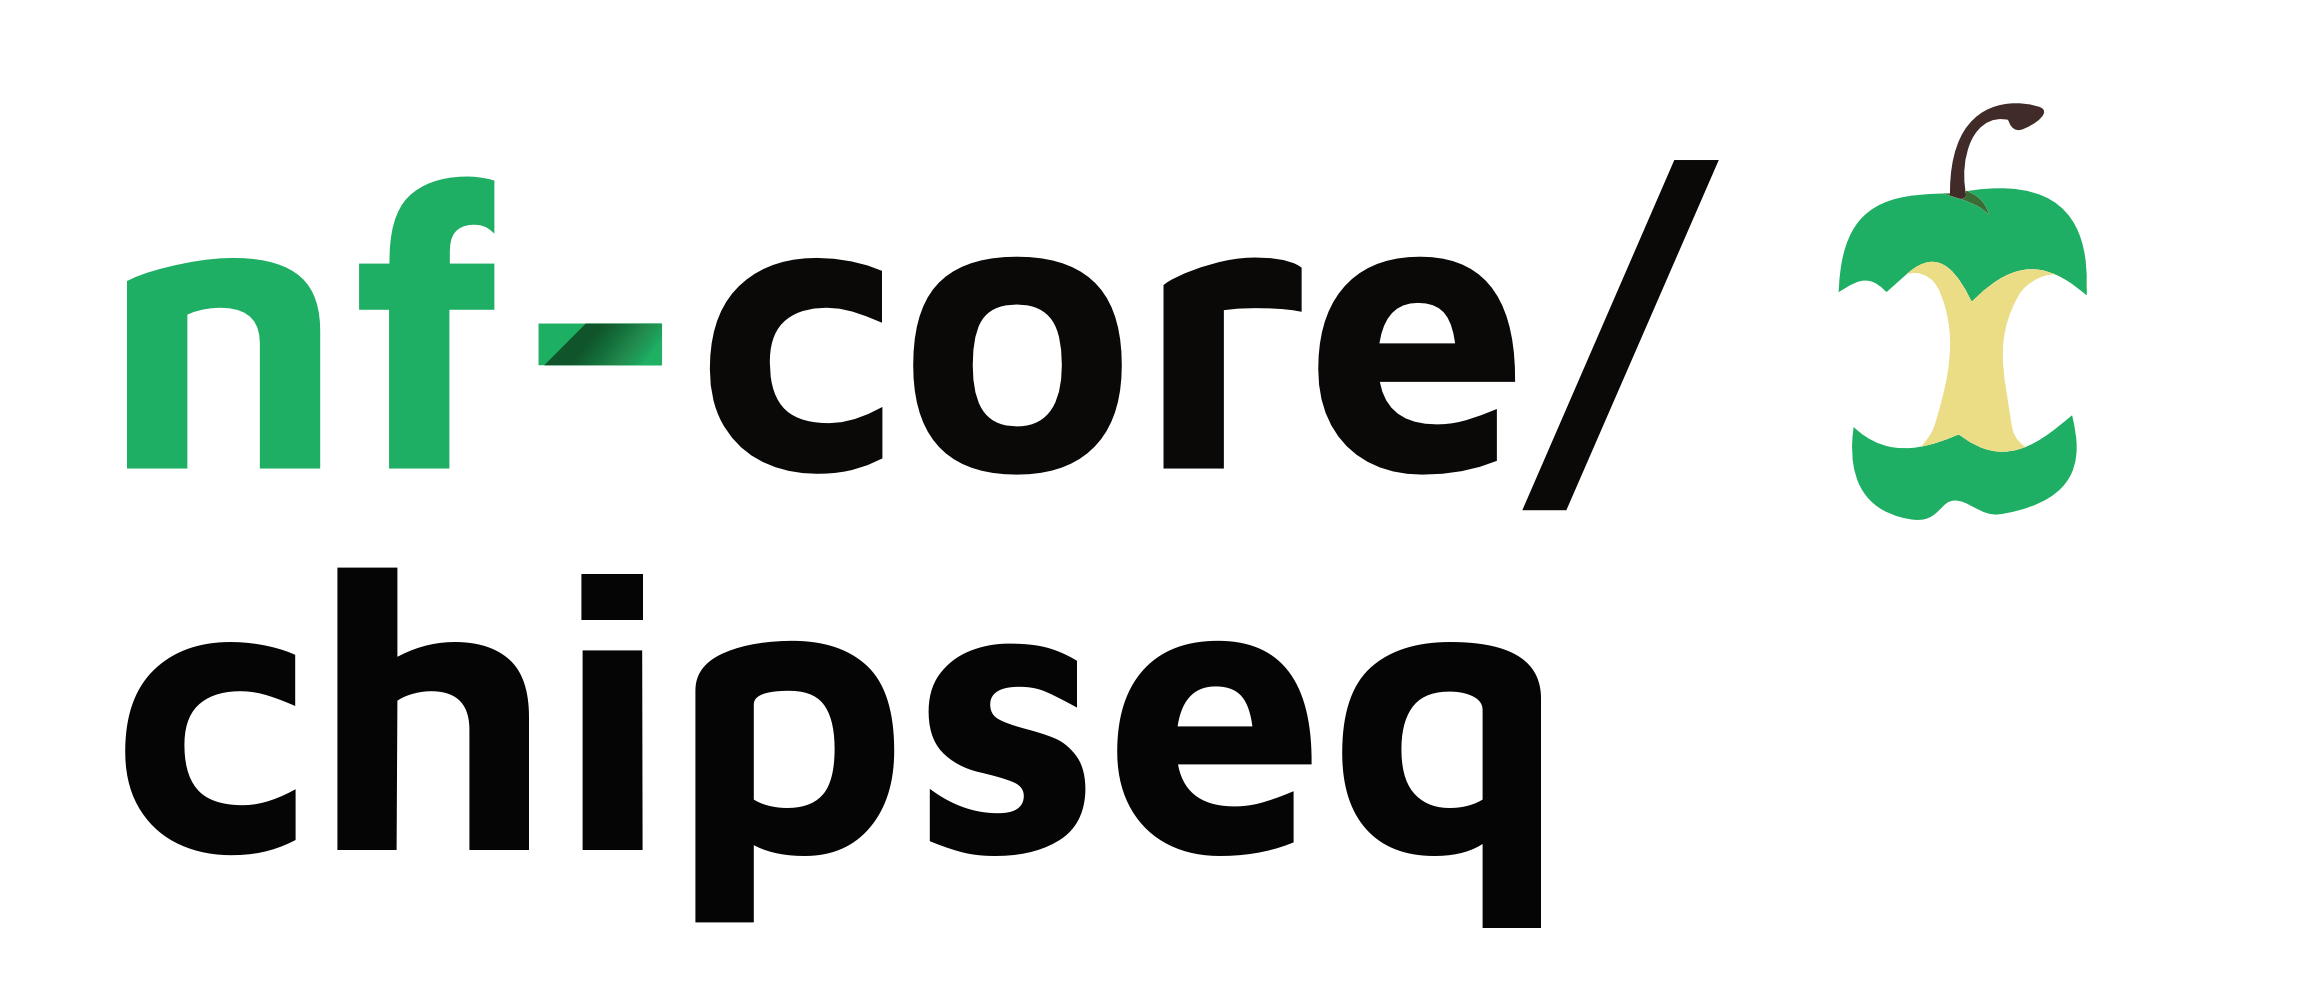 nf-core-chipseq_logo_light.png